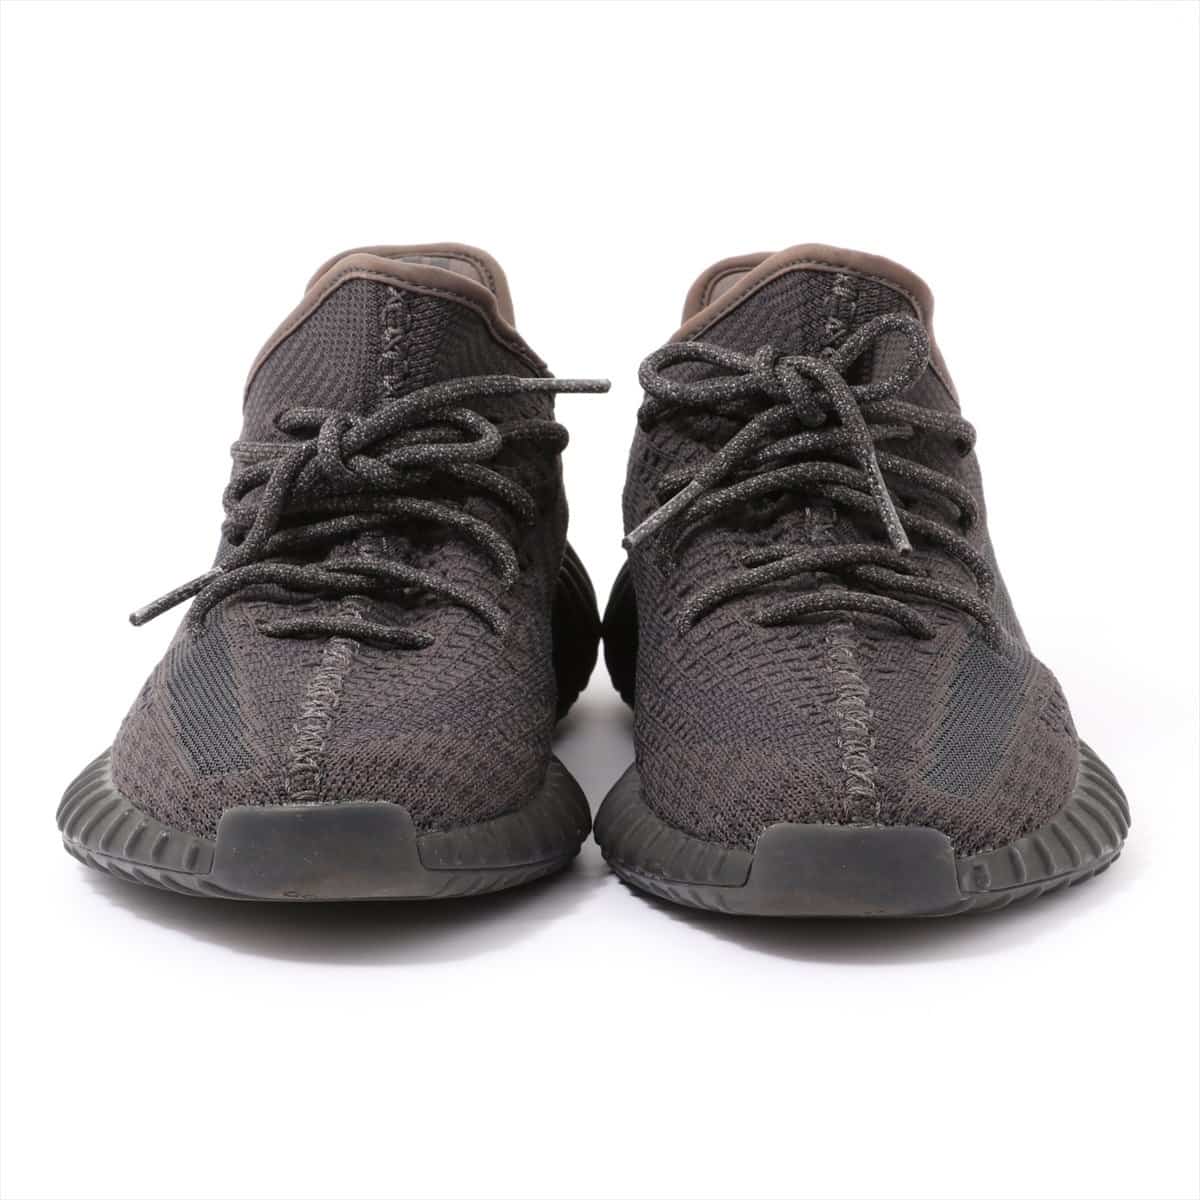 Adidas YEEZY BOOST 350 V2 Knit Sneakers 27.5cm Men's Grey